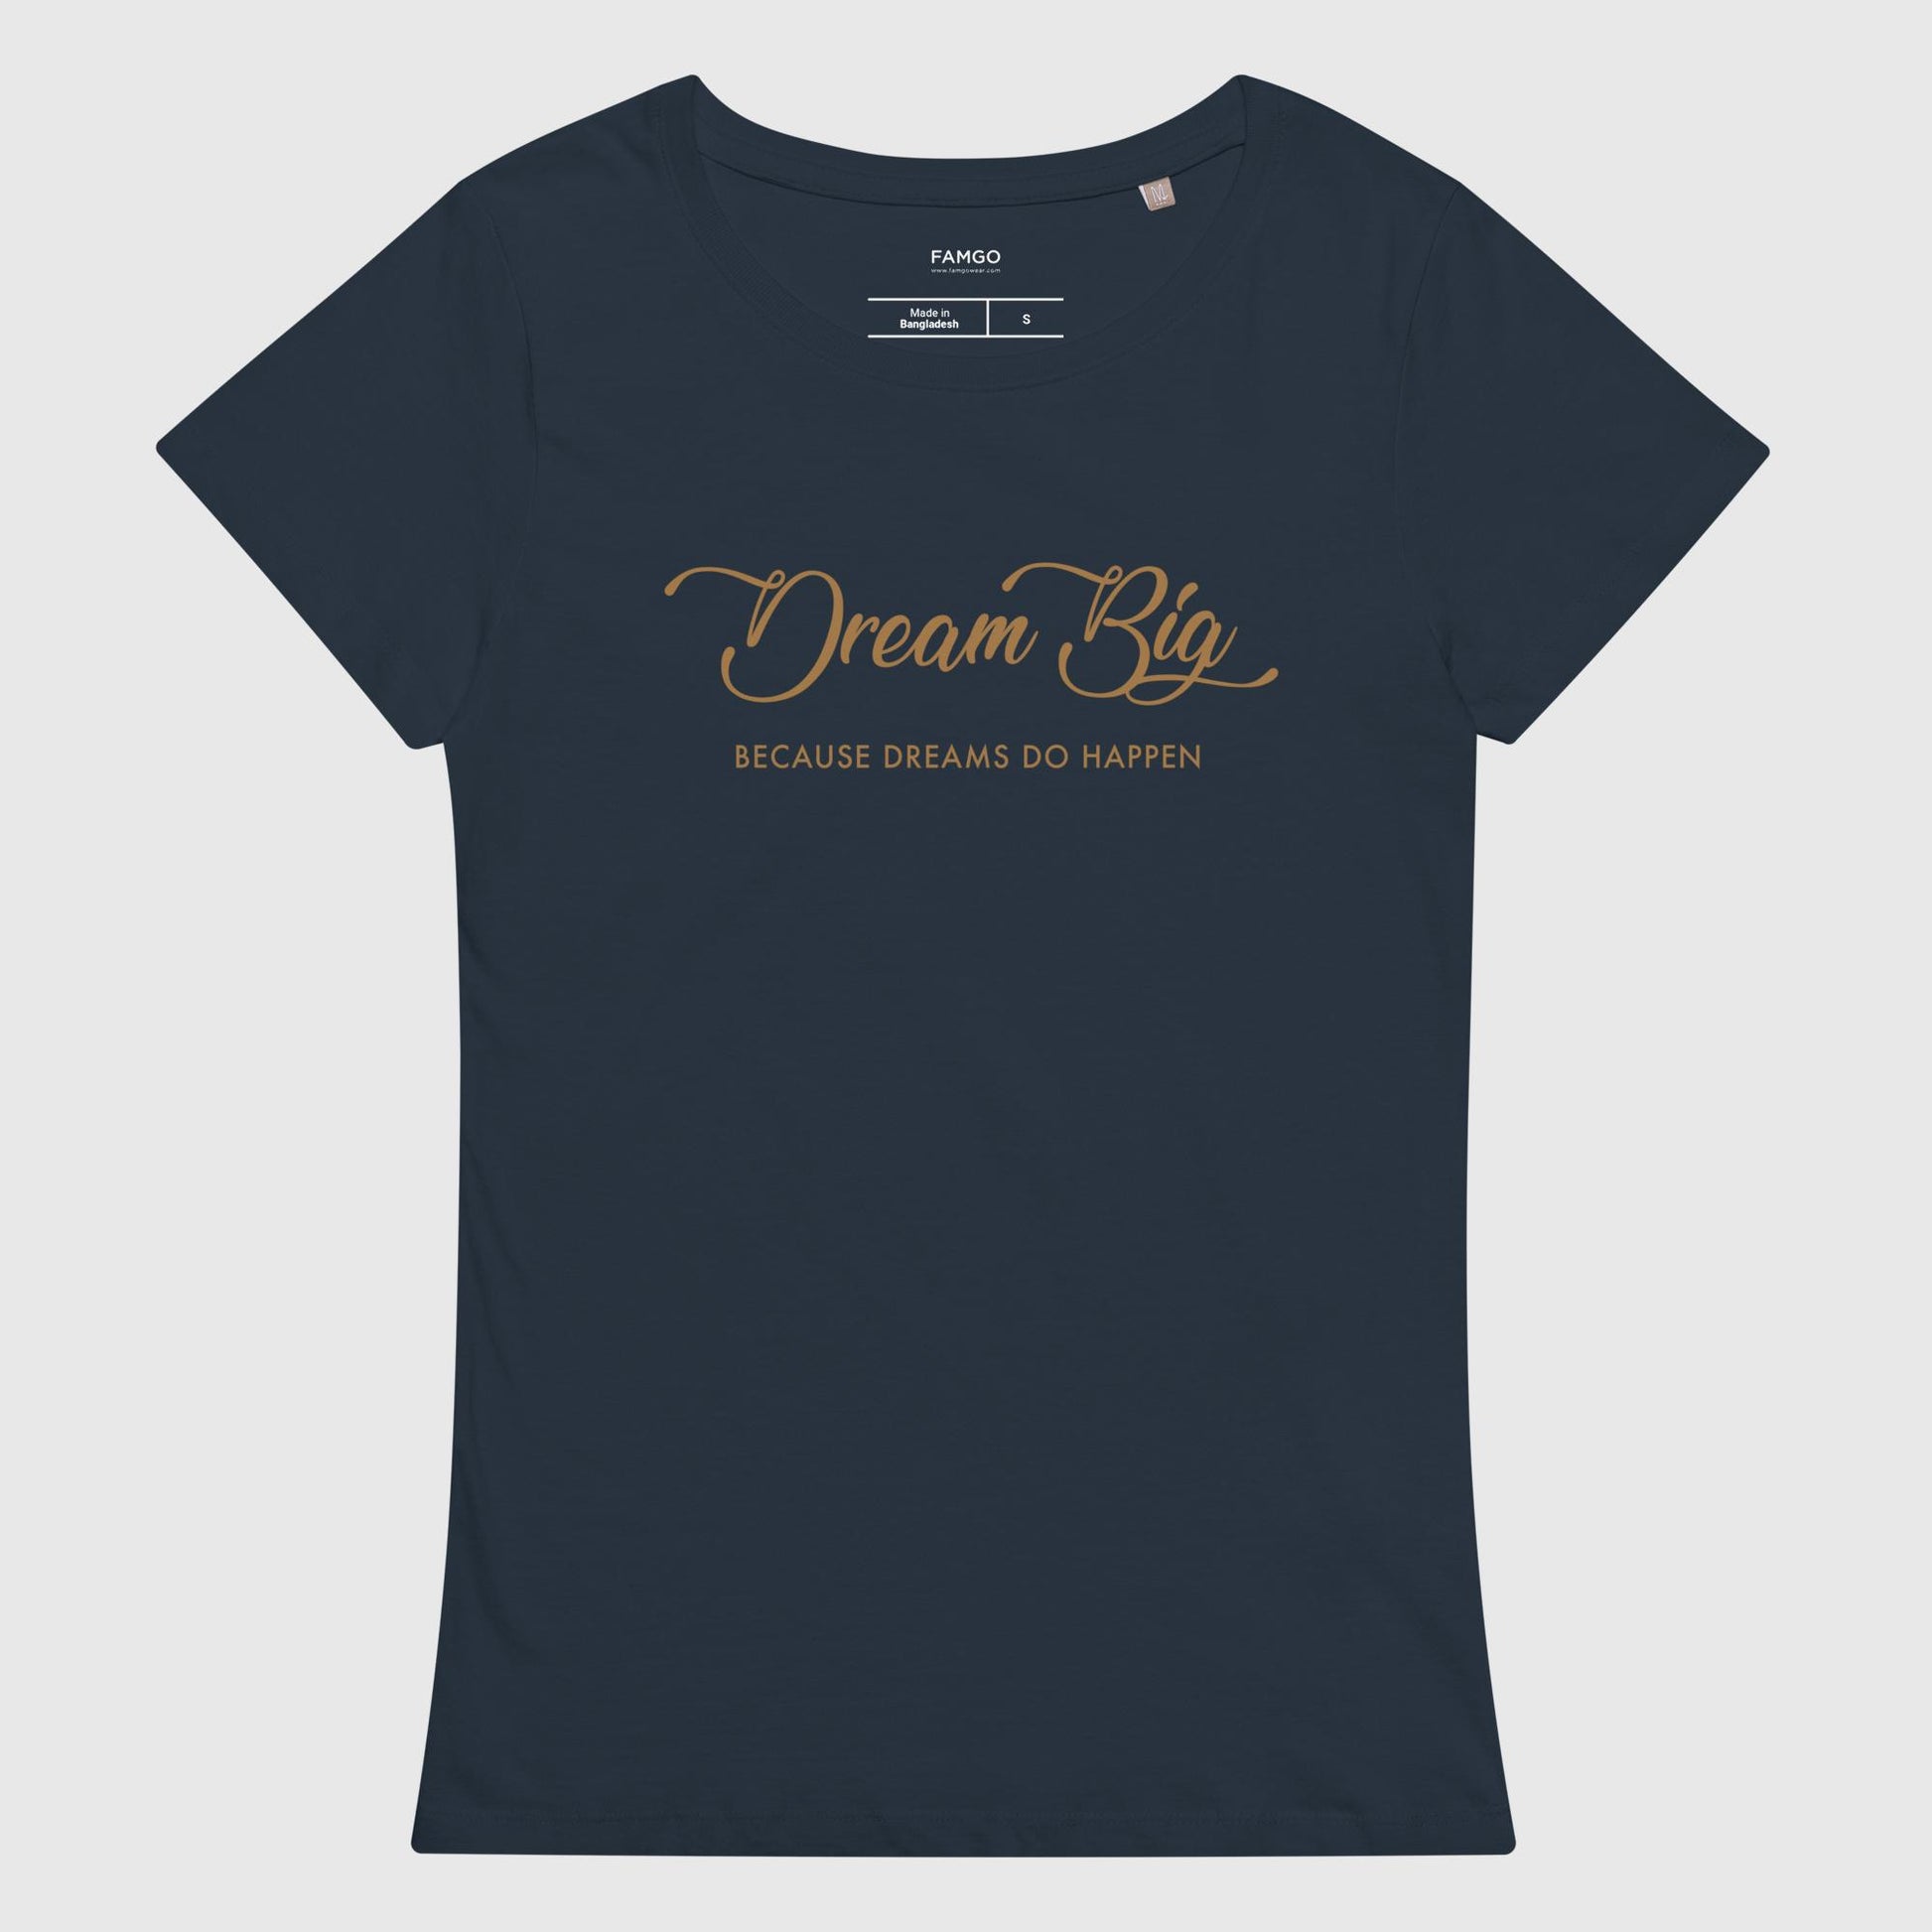 Women's navy organic cotton t-shirt that features Alex Morgan's inspirational quote, "Dream Big - Because Dreams Do Happen."